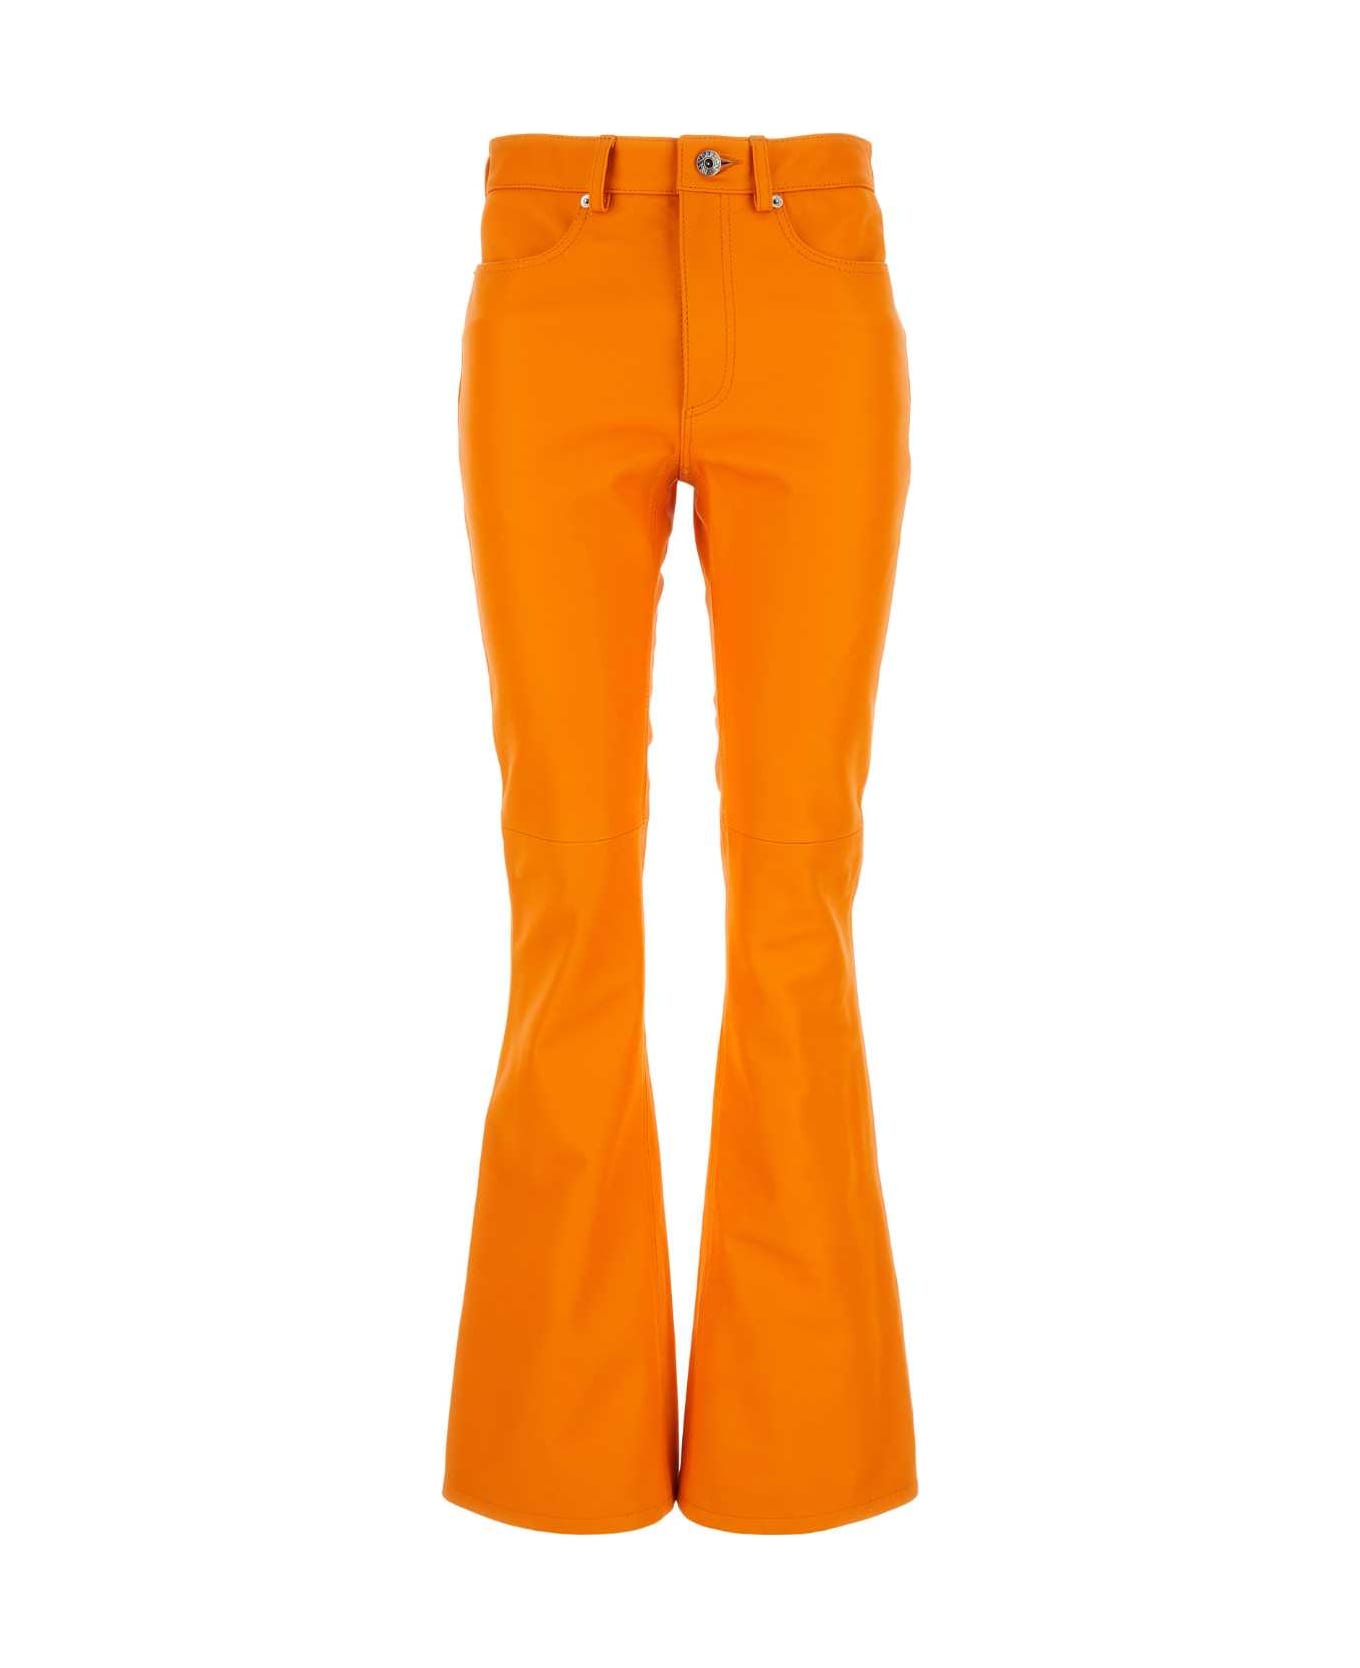 J.W. Anderson Orange Leather Pant - Orange ボトムス